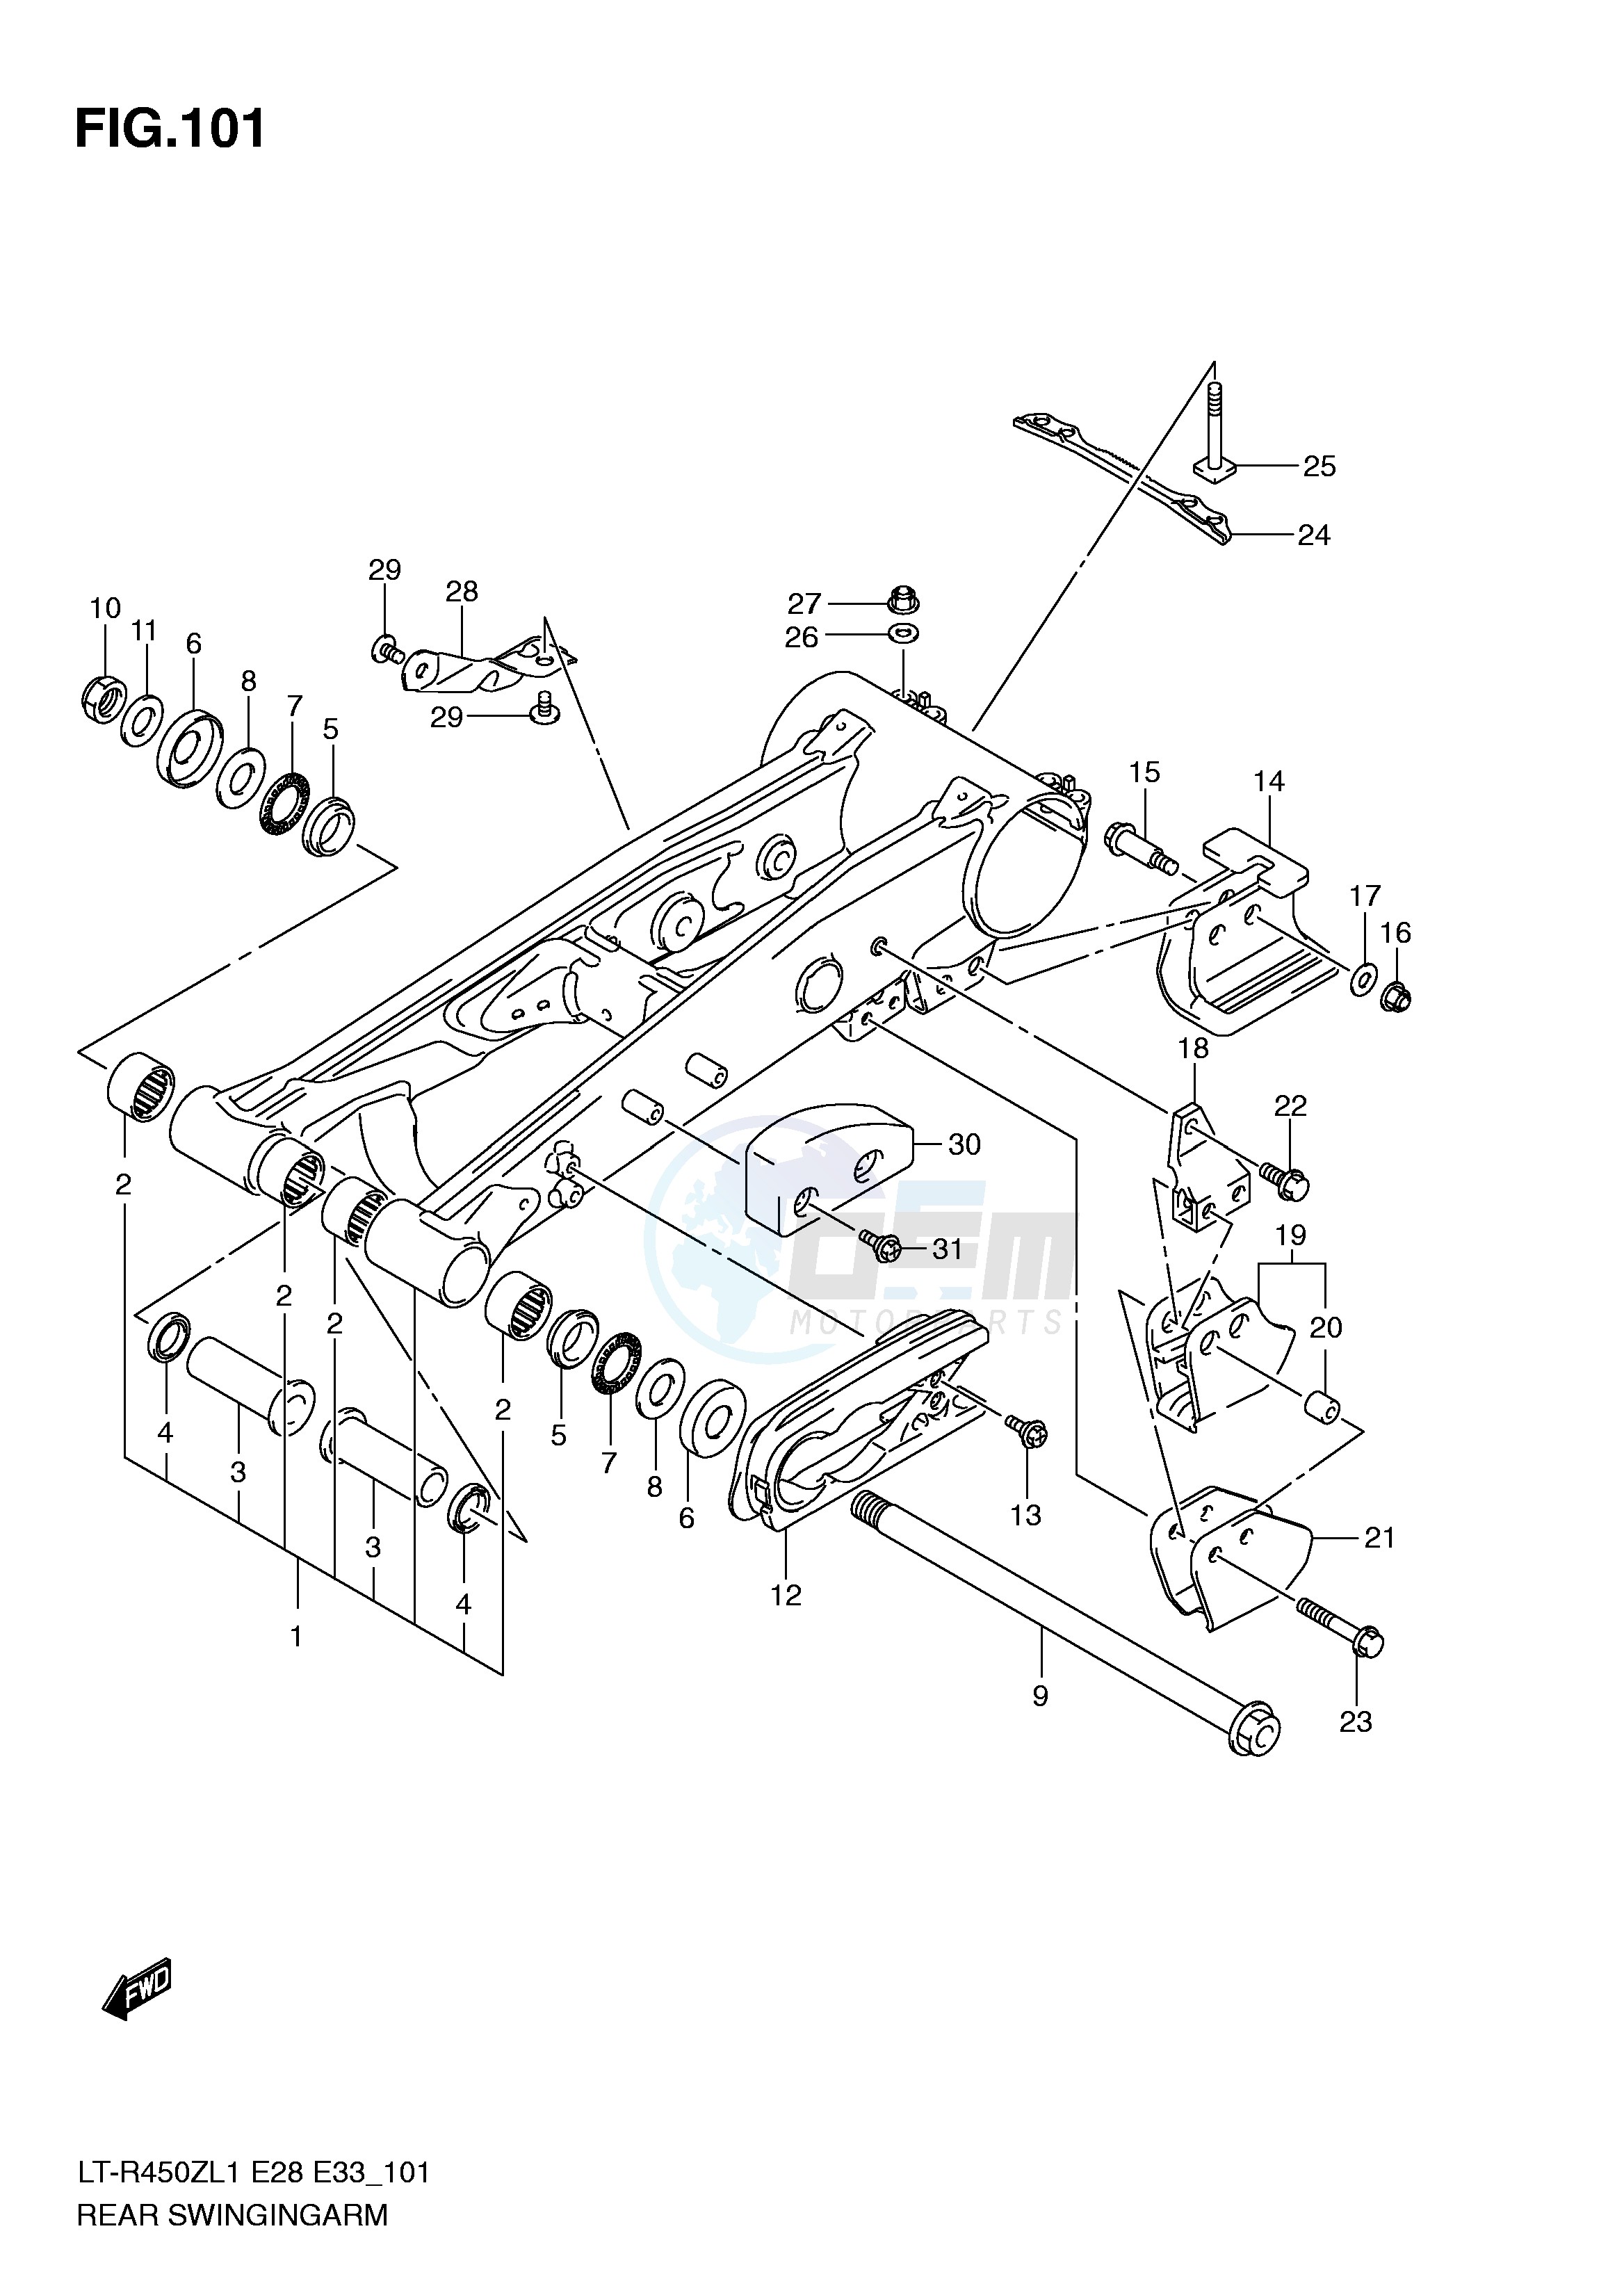 REAR SWINGING ARM (LT-R450L1 E28) blueprint